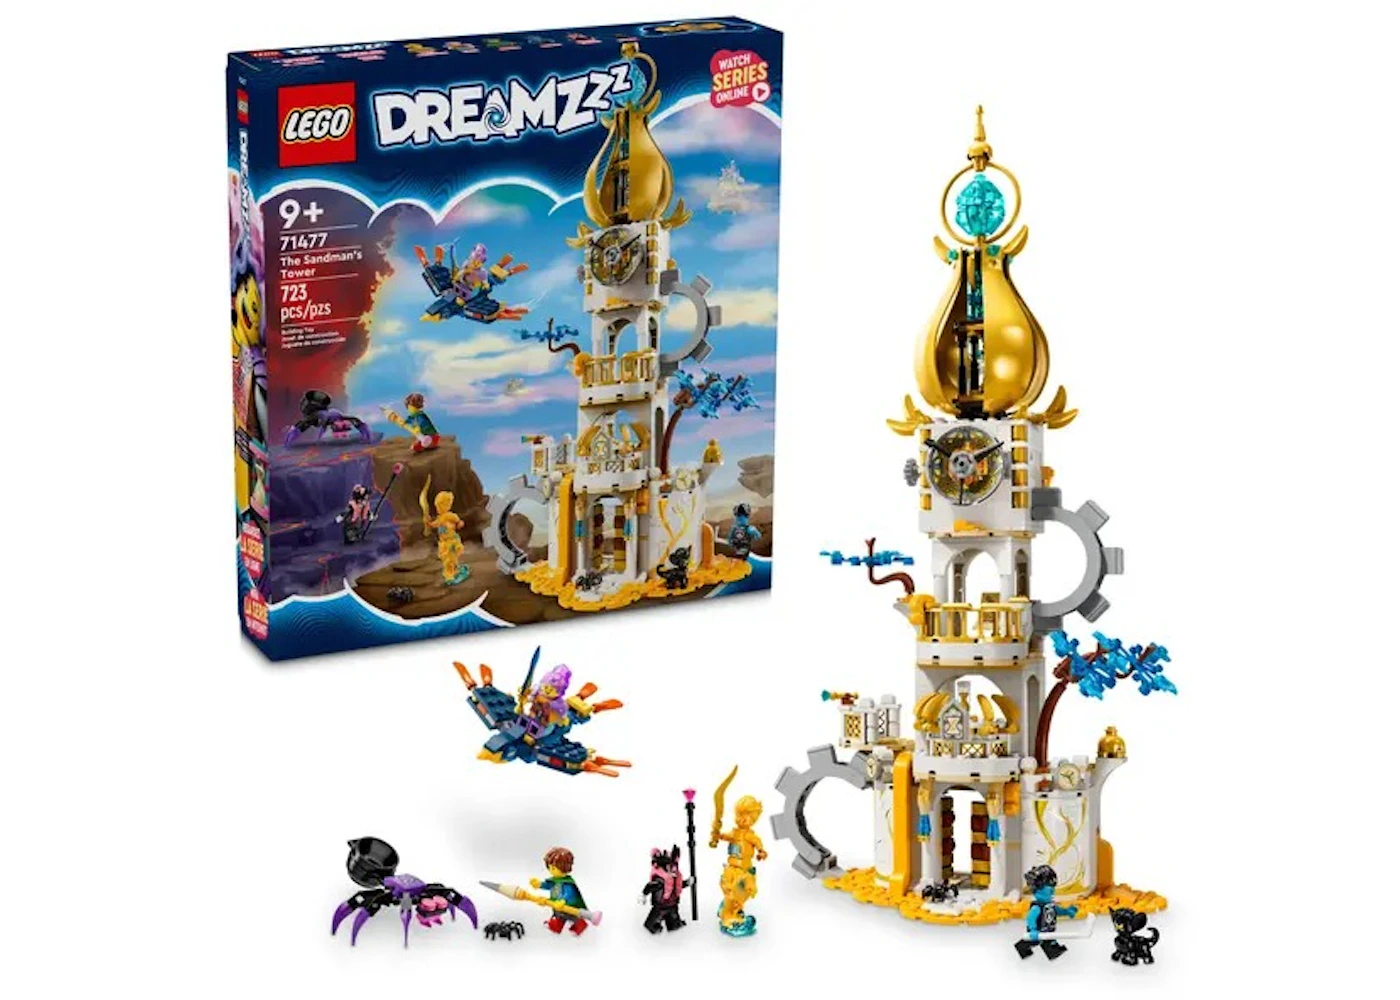 LEGO Dreamz The Sandman's Tower Set 71477